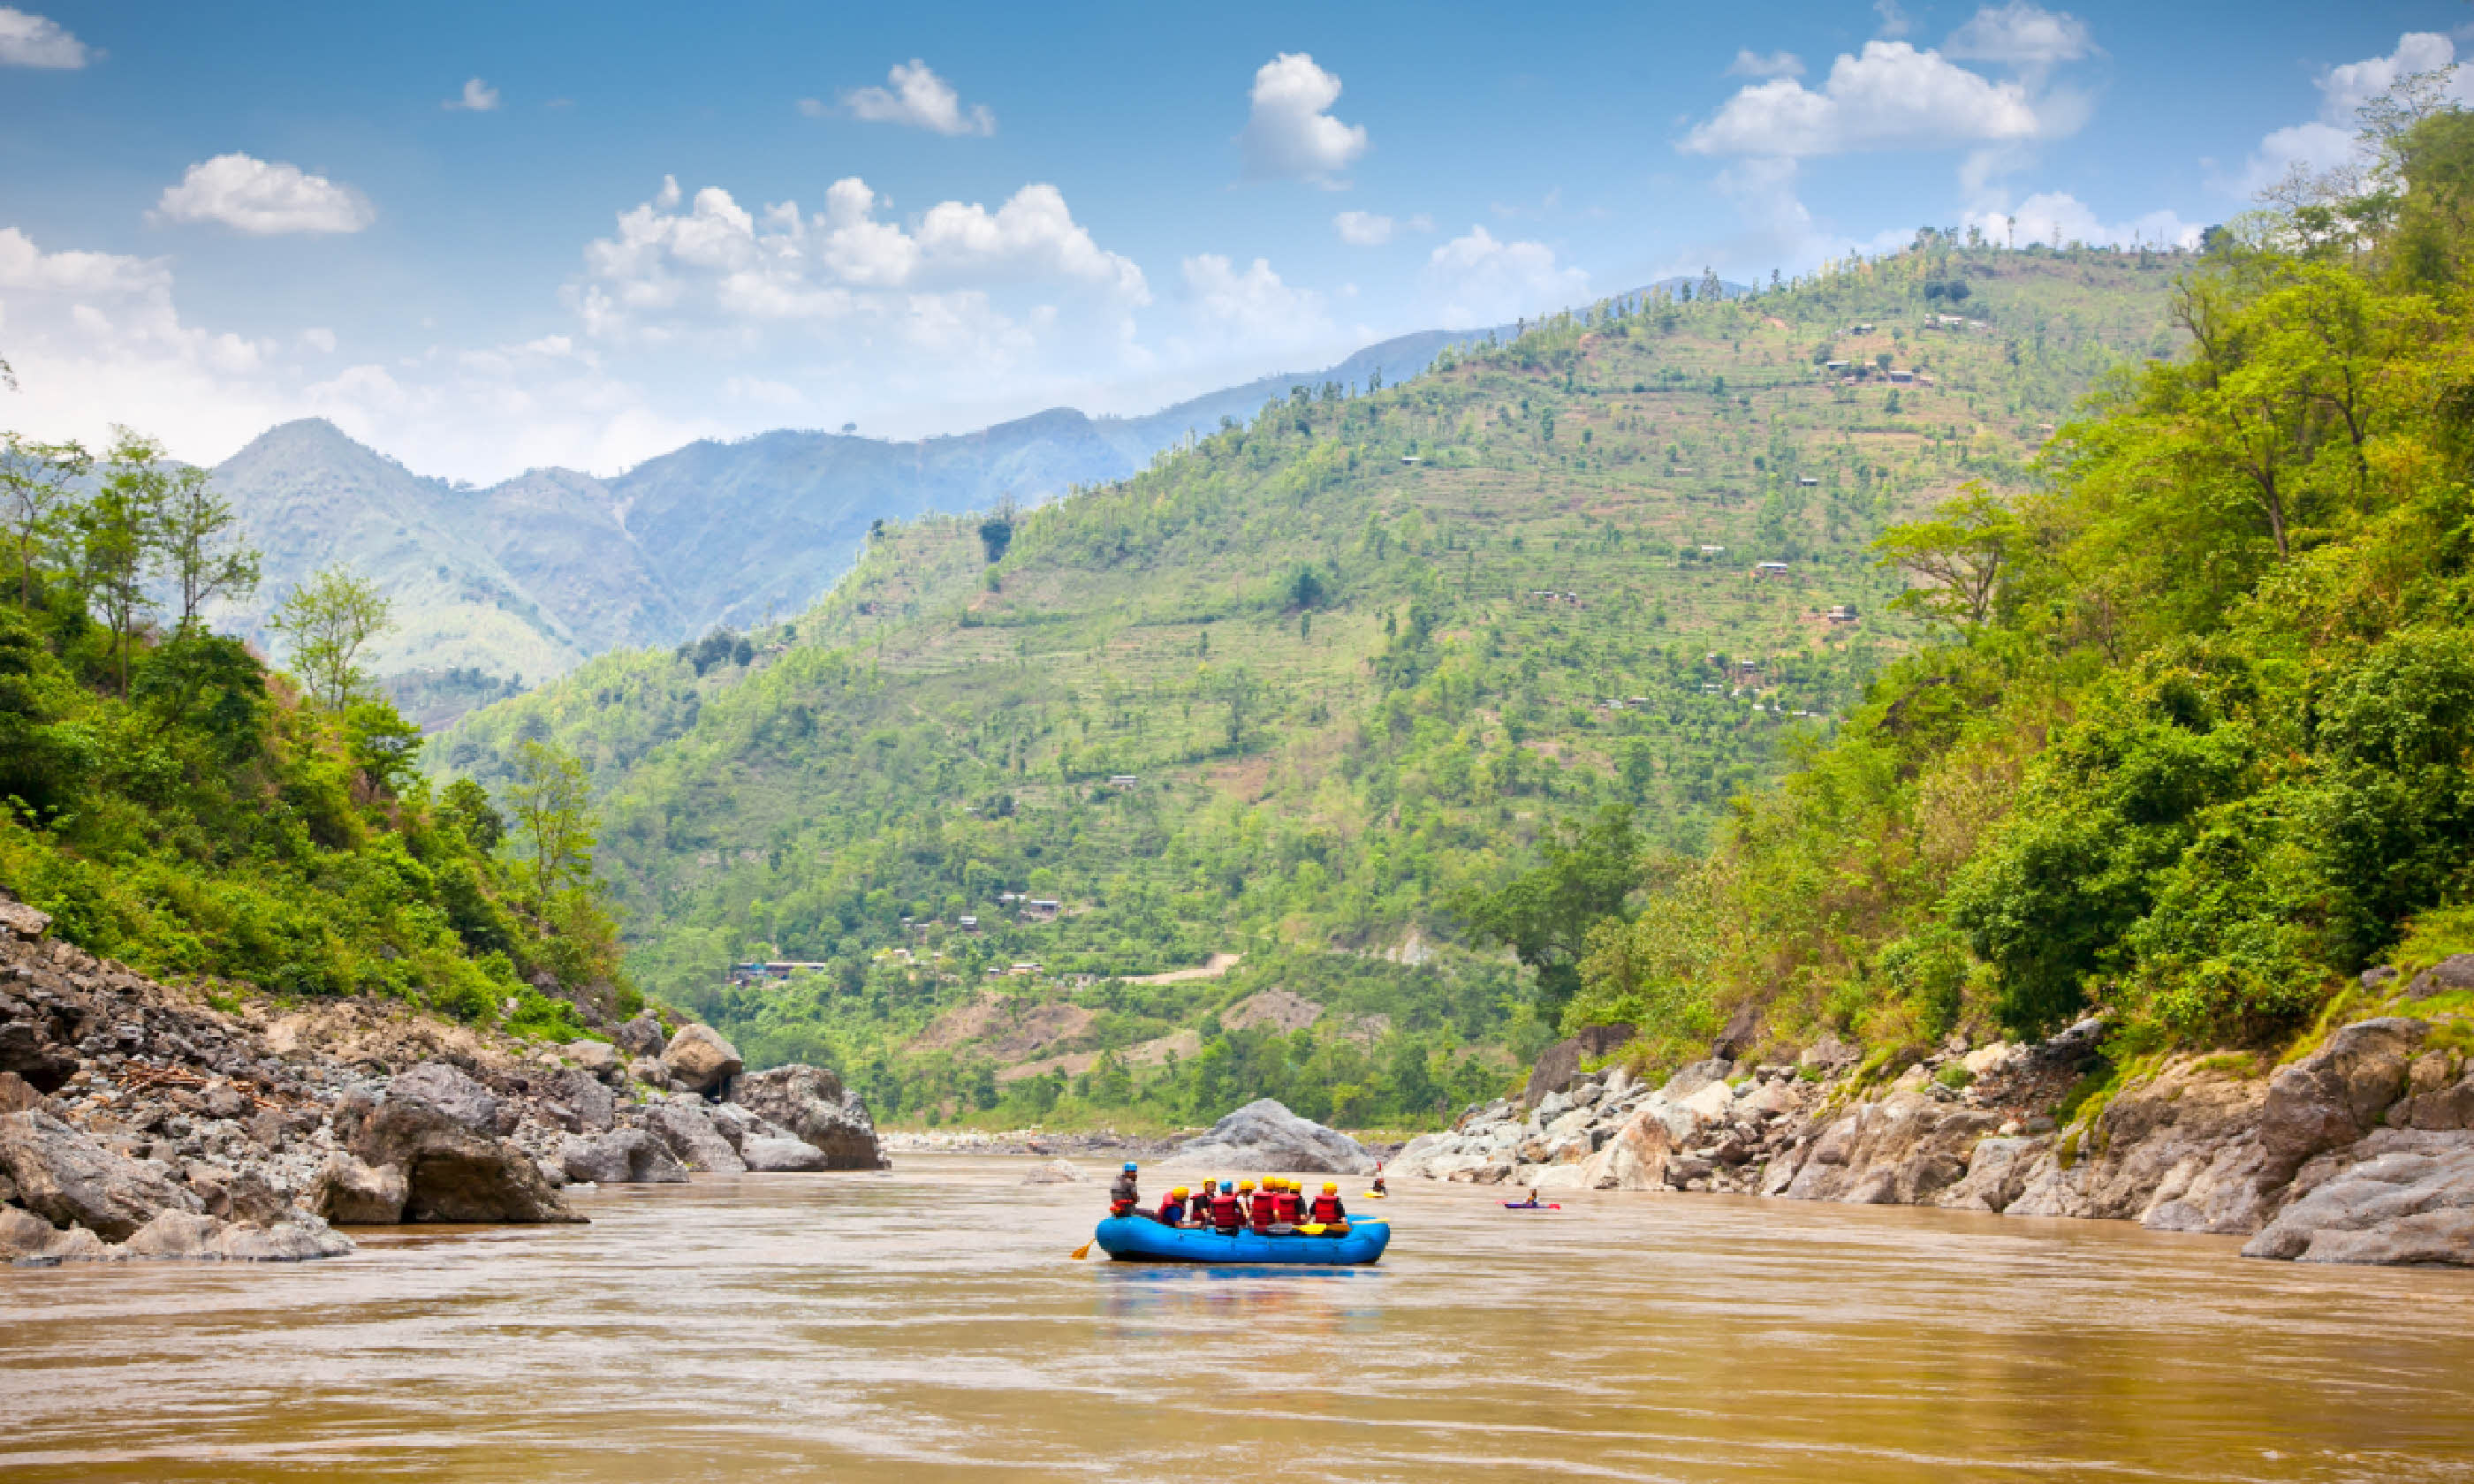 Rafting on the Bhote Kosi (Shutterstock)